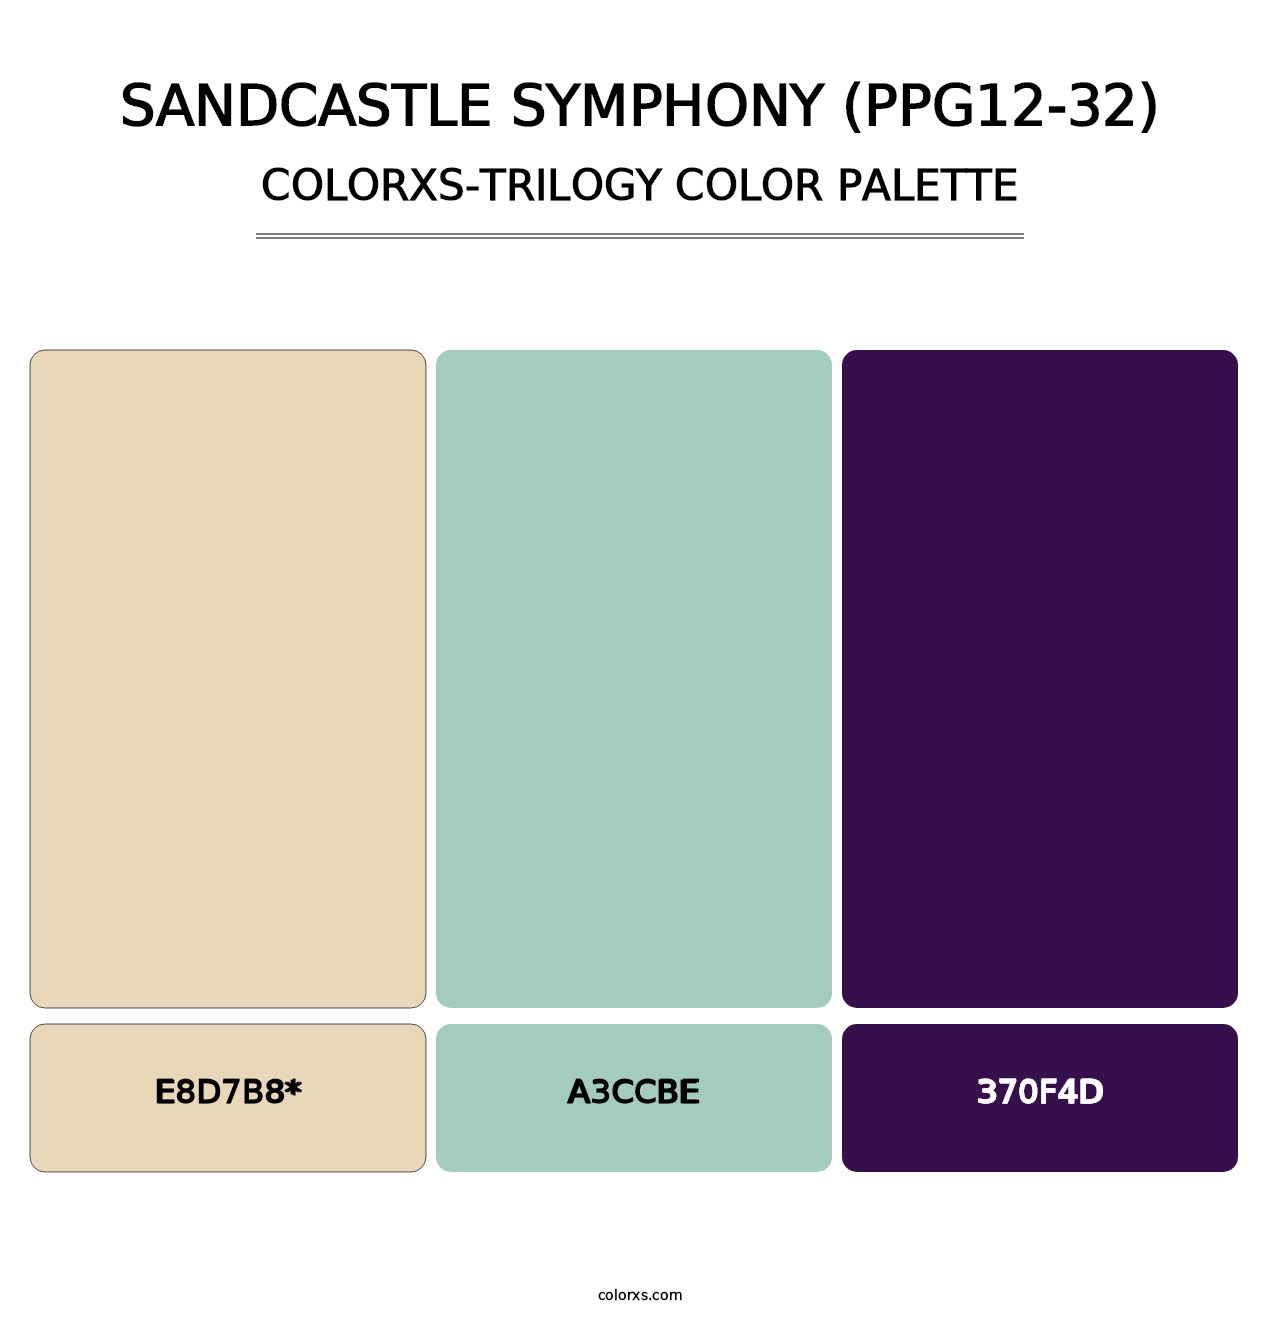 Sandcastle Symphony (PPG12-32) - Colorxs Trilogy Palette